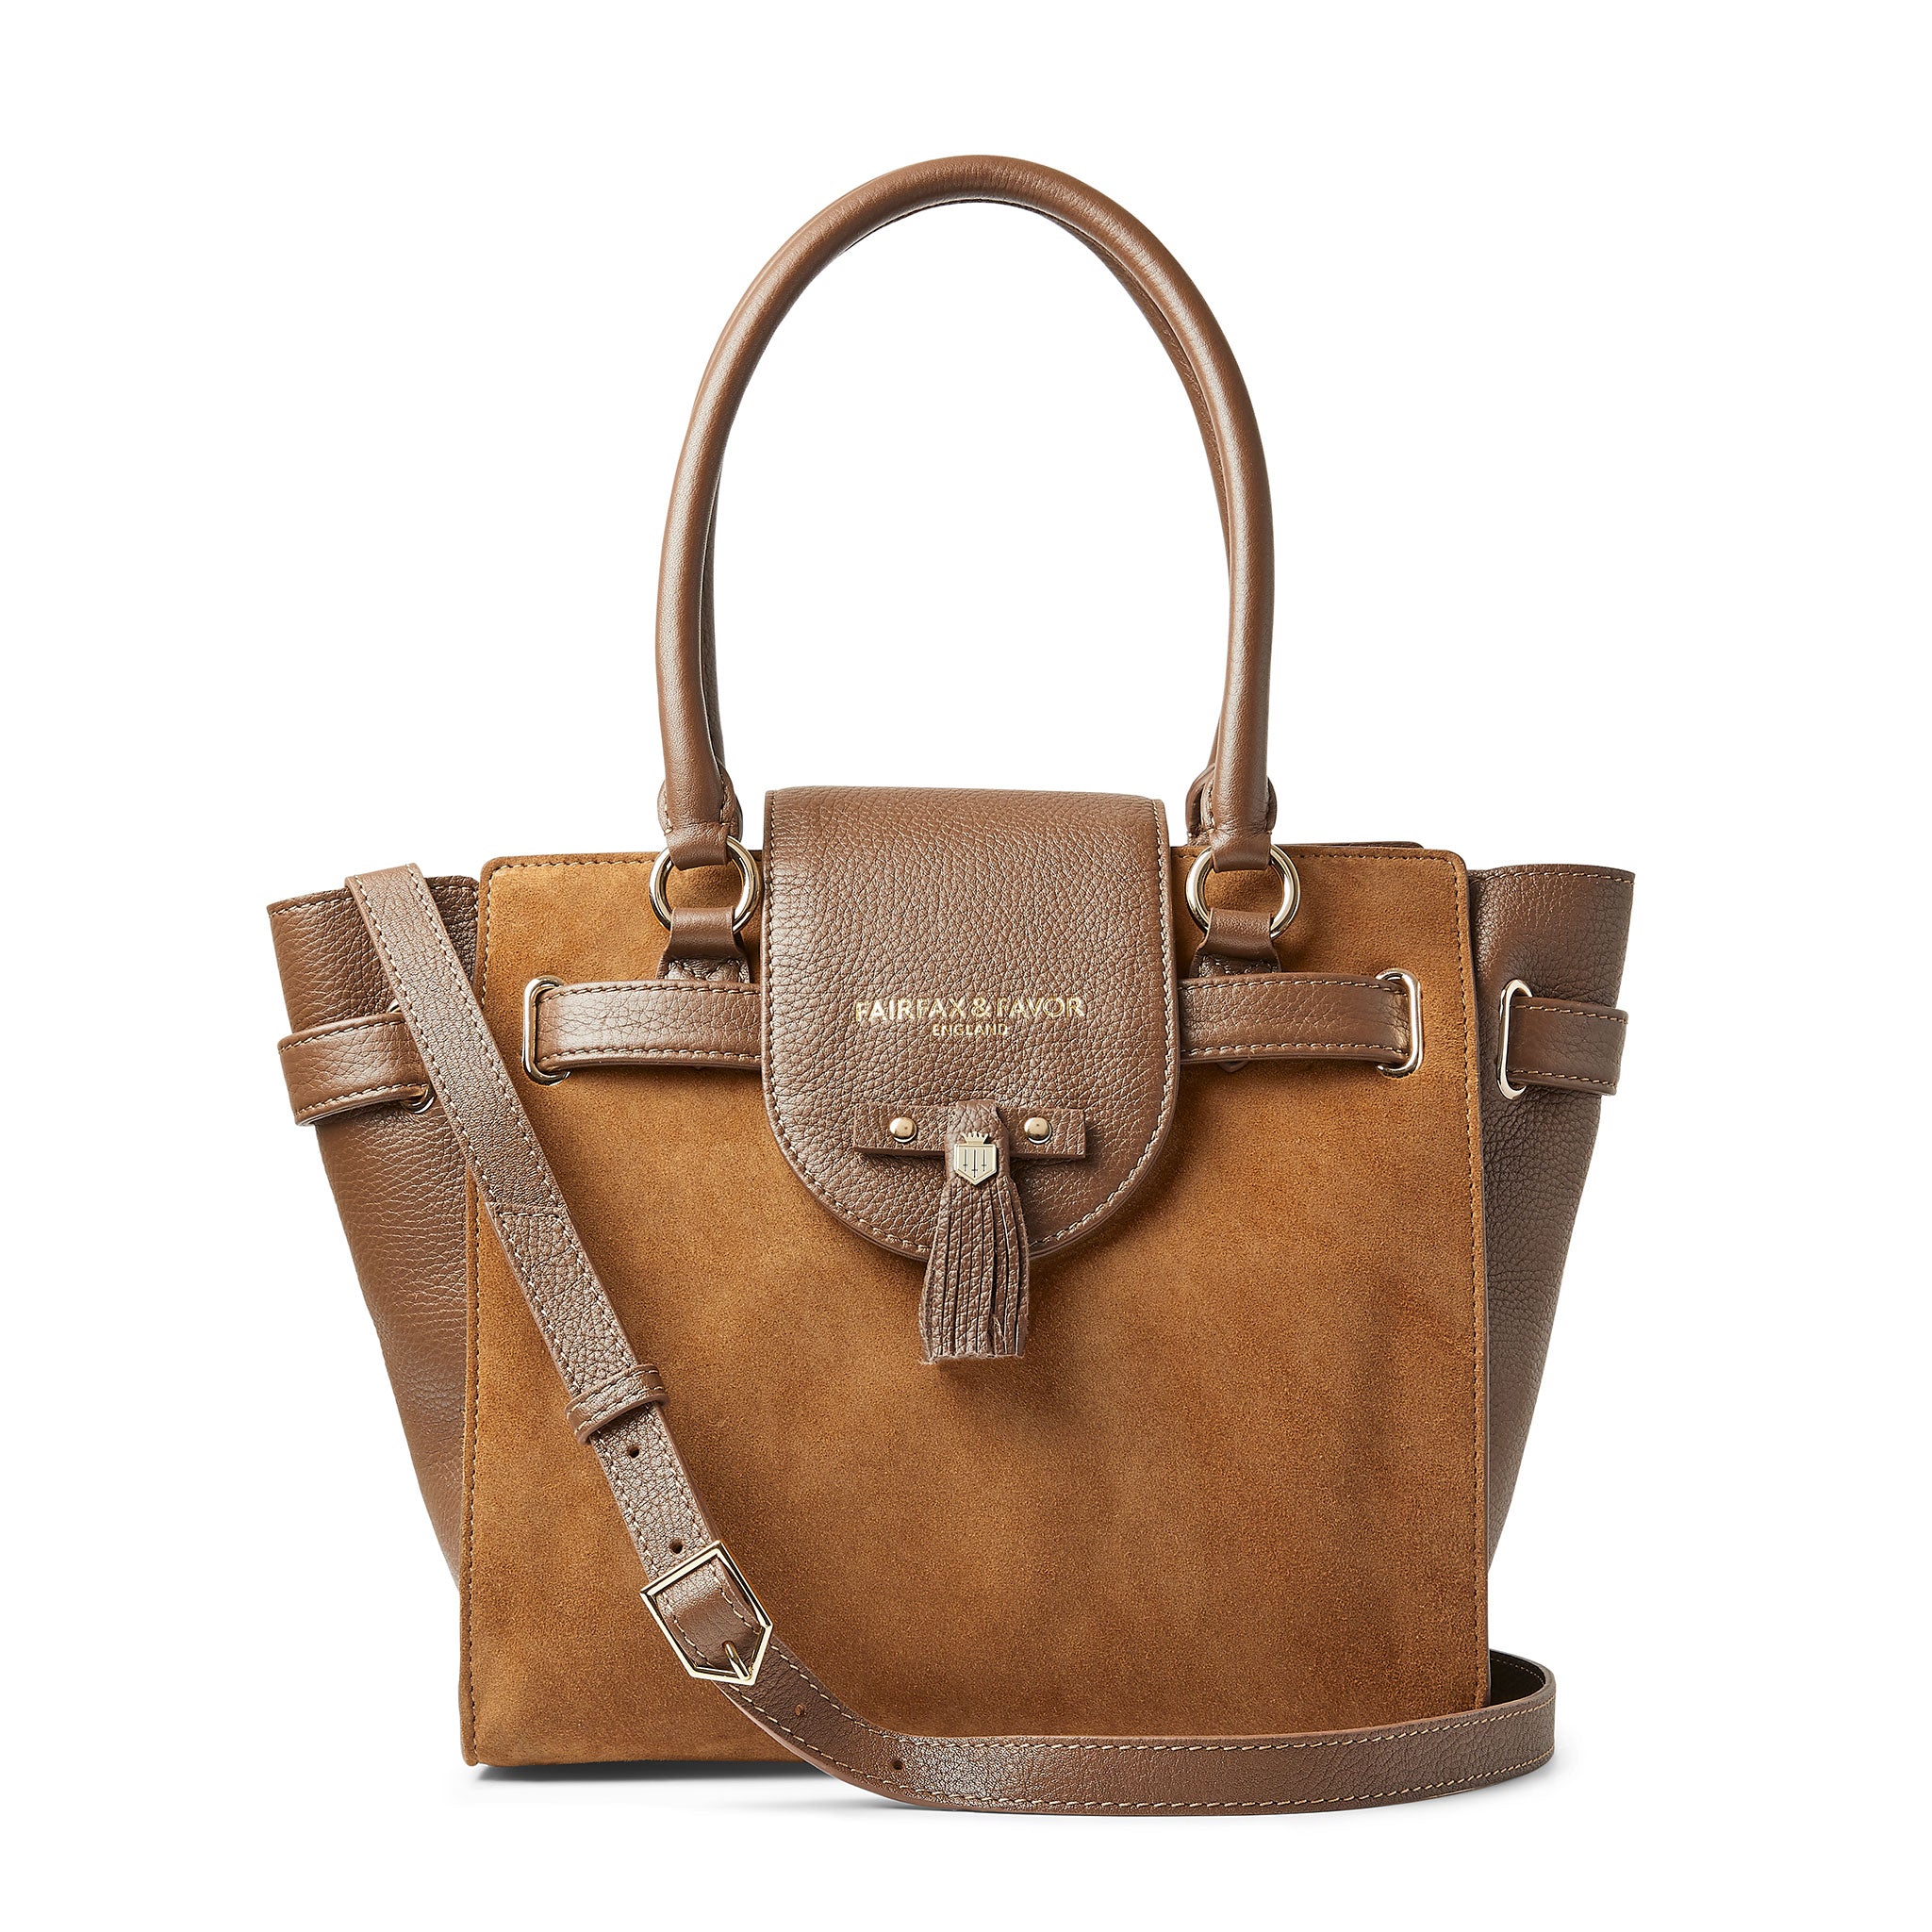 Fairfax & Favor Windsor Tote Handbag - Tan